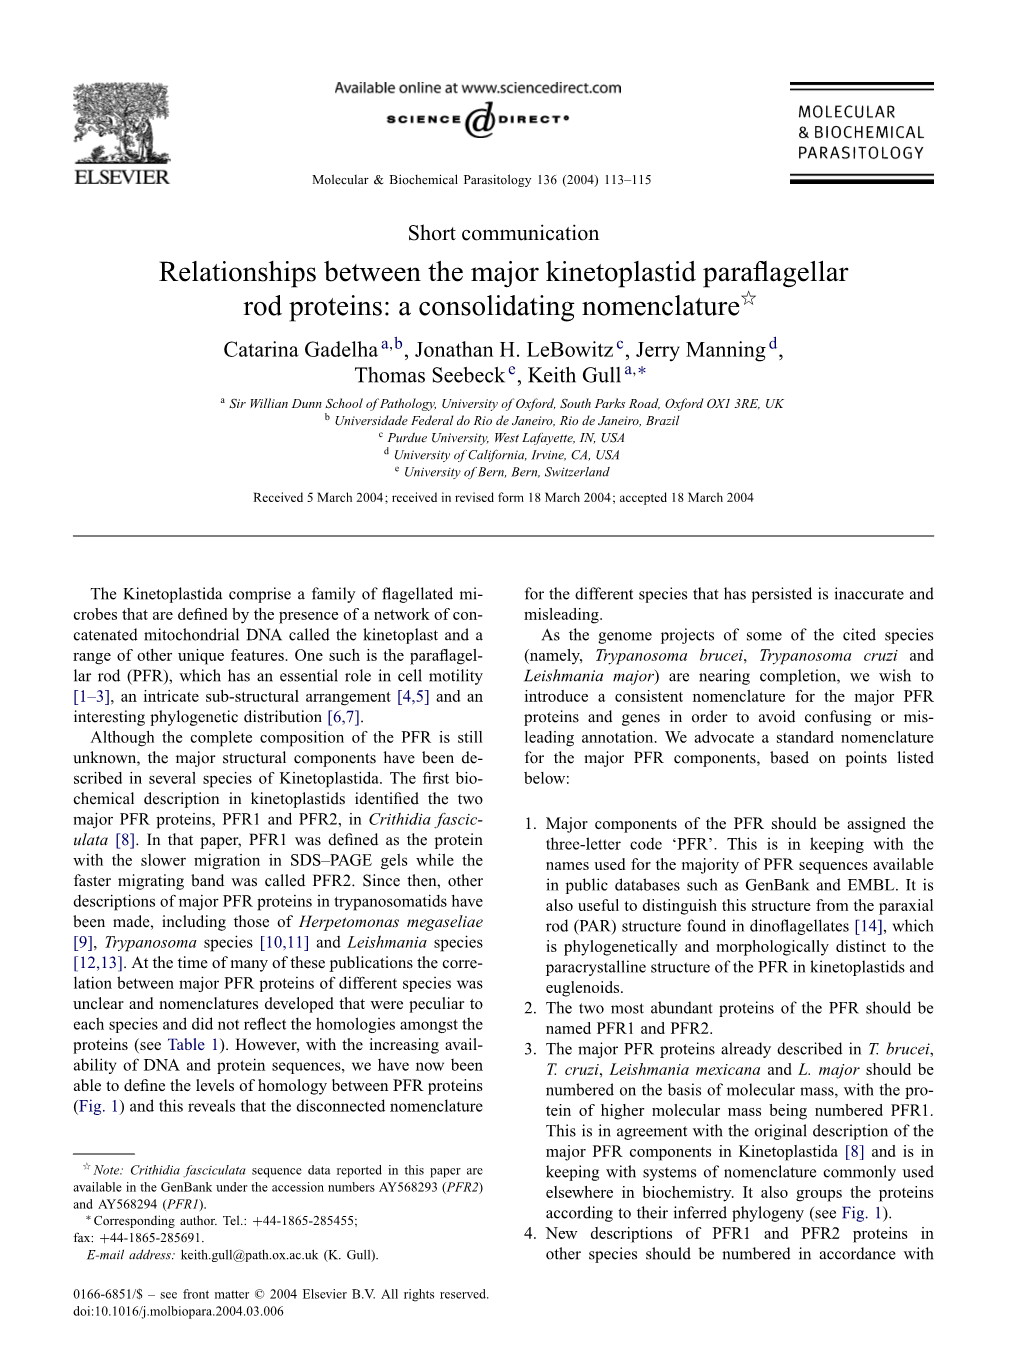 Relationships Between the Major Kinetoplastid Paraﬂagellar Rod Proteins: a Consolidating Nomenclatureଝ Catarina Gadelha A,B, Jonathan H